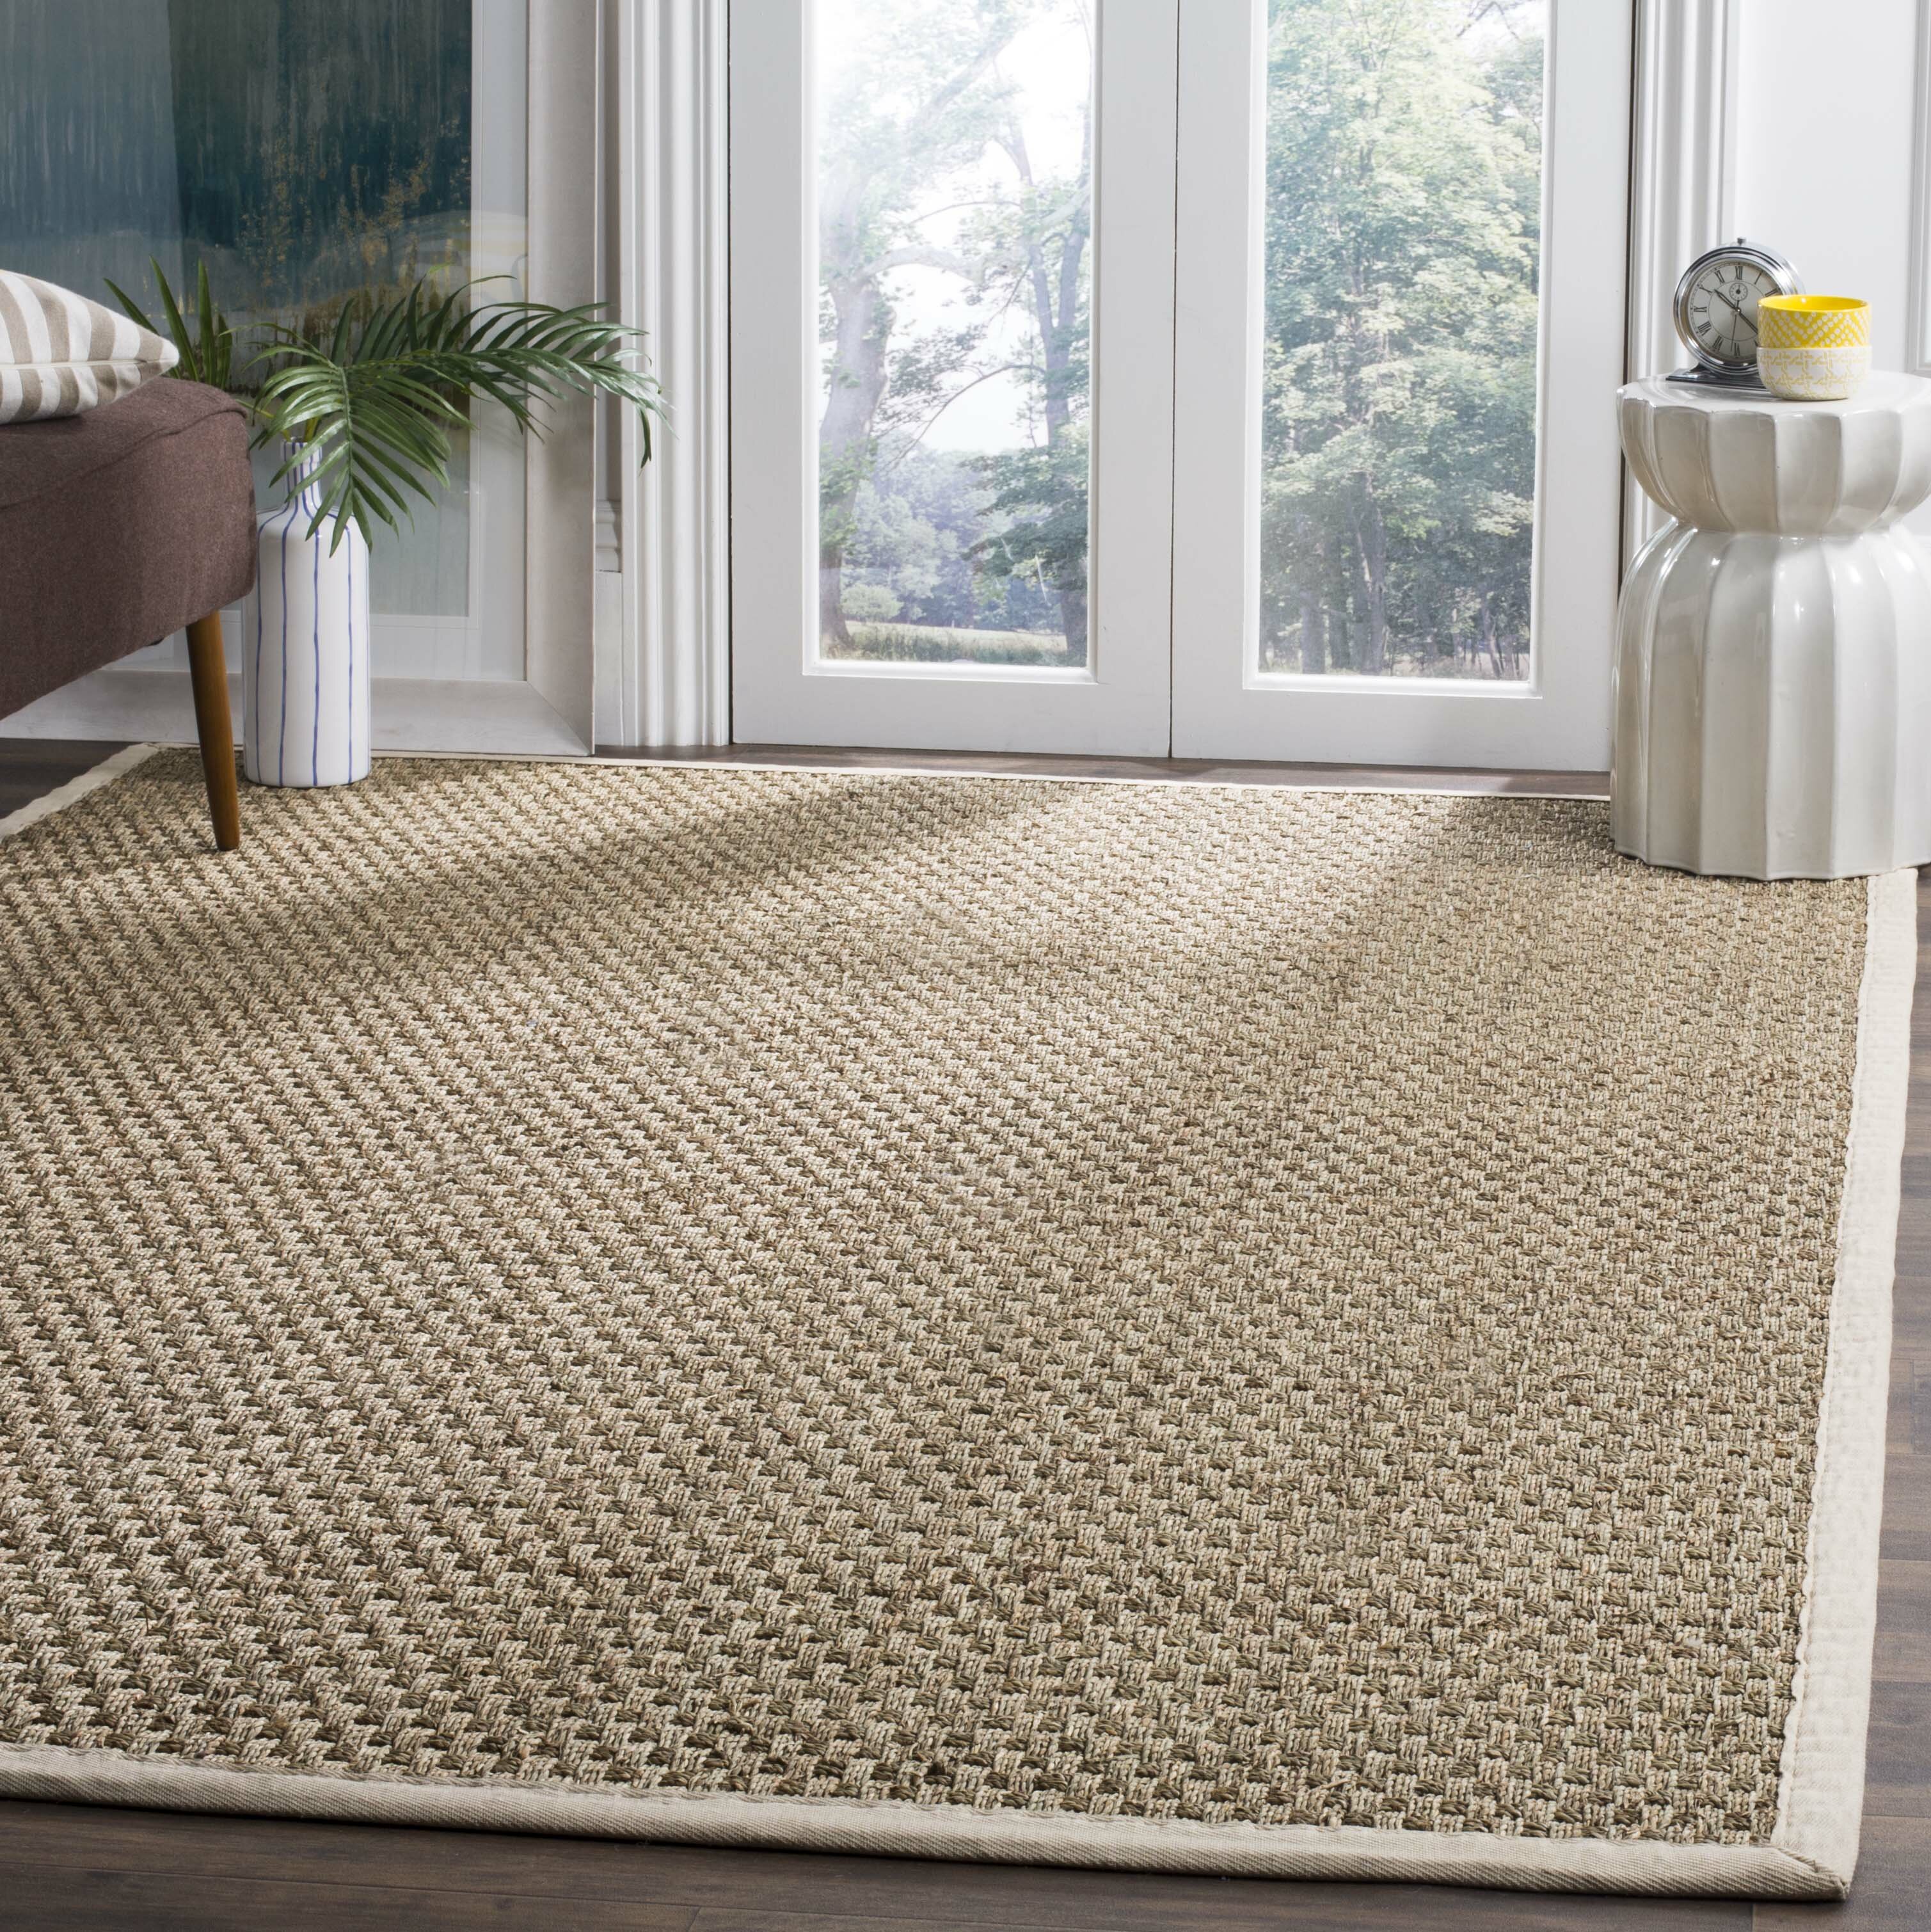 Natural Bamboo 5' X 8' Floor Mat, Bamboo Area Rug Indoor Carpet Non Skid